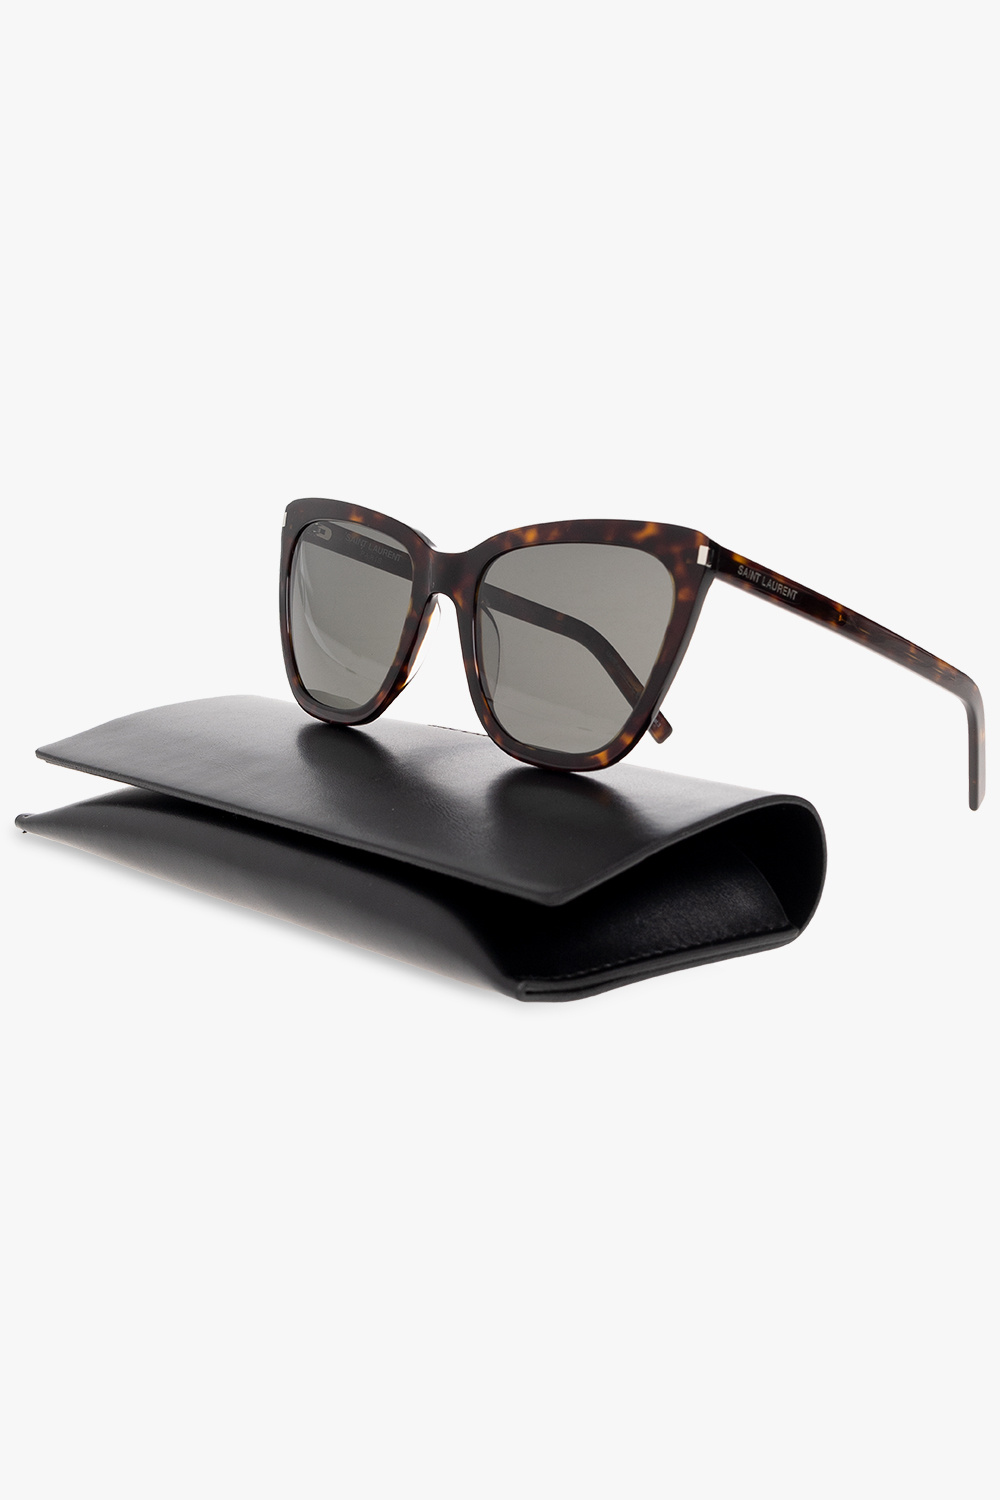 Saint Laurent ‘SL 548 SLIM’ sunglasses